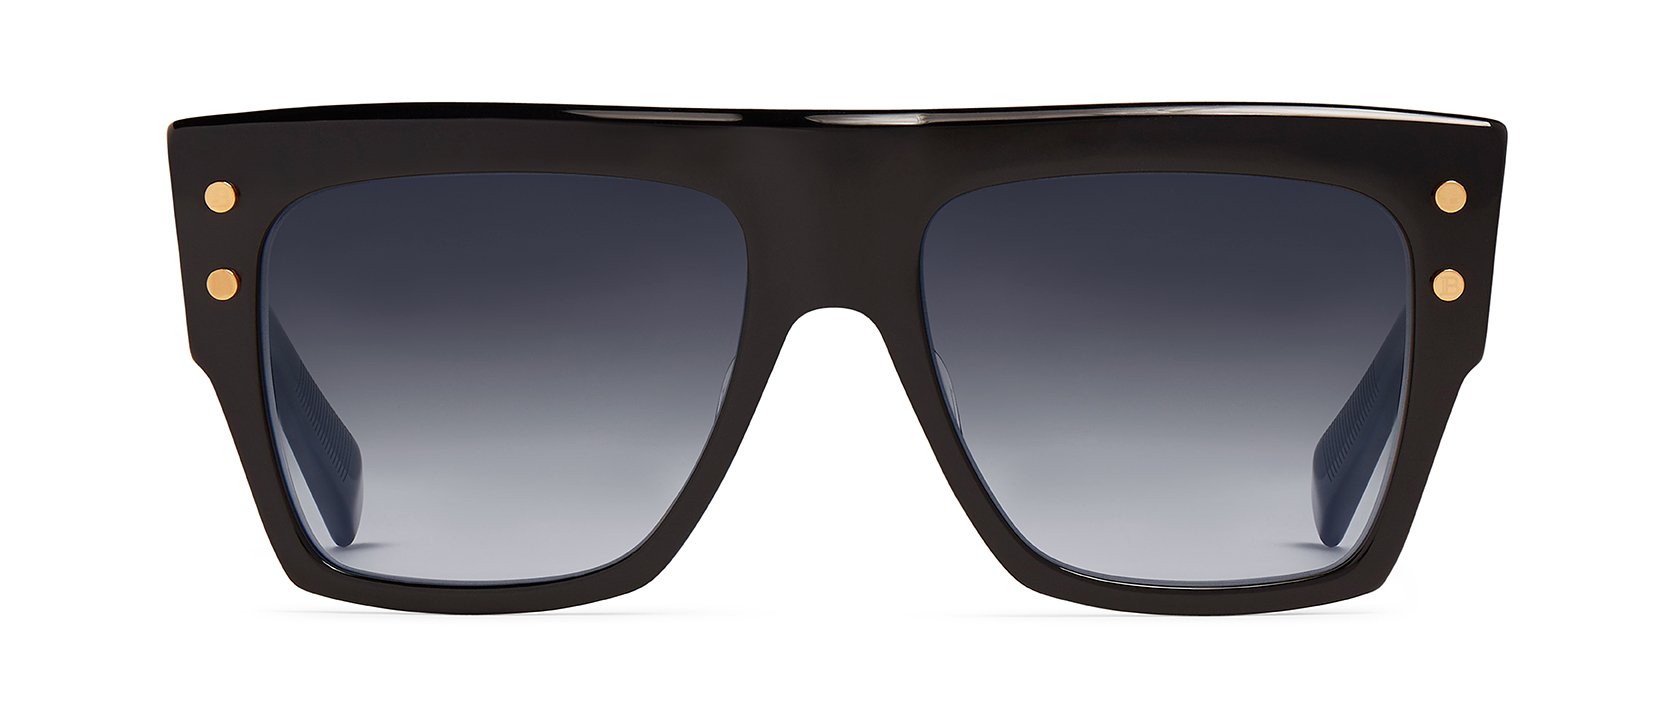 Balmain Imperial Black Acetate & Titanium Rectangle Sunglasses, Blk-Gld, Women's, Sunglasses Square Sunglasses